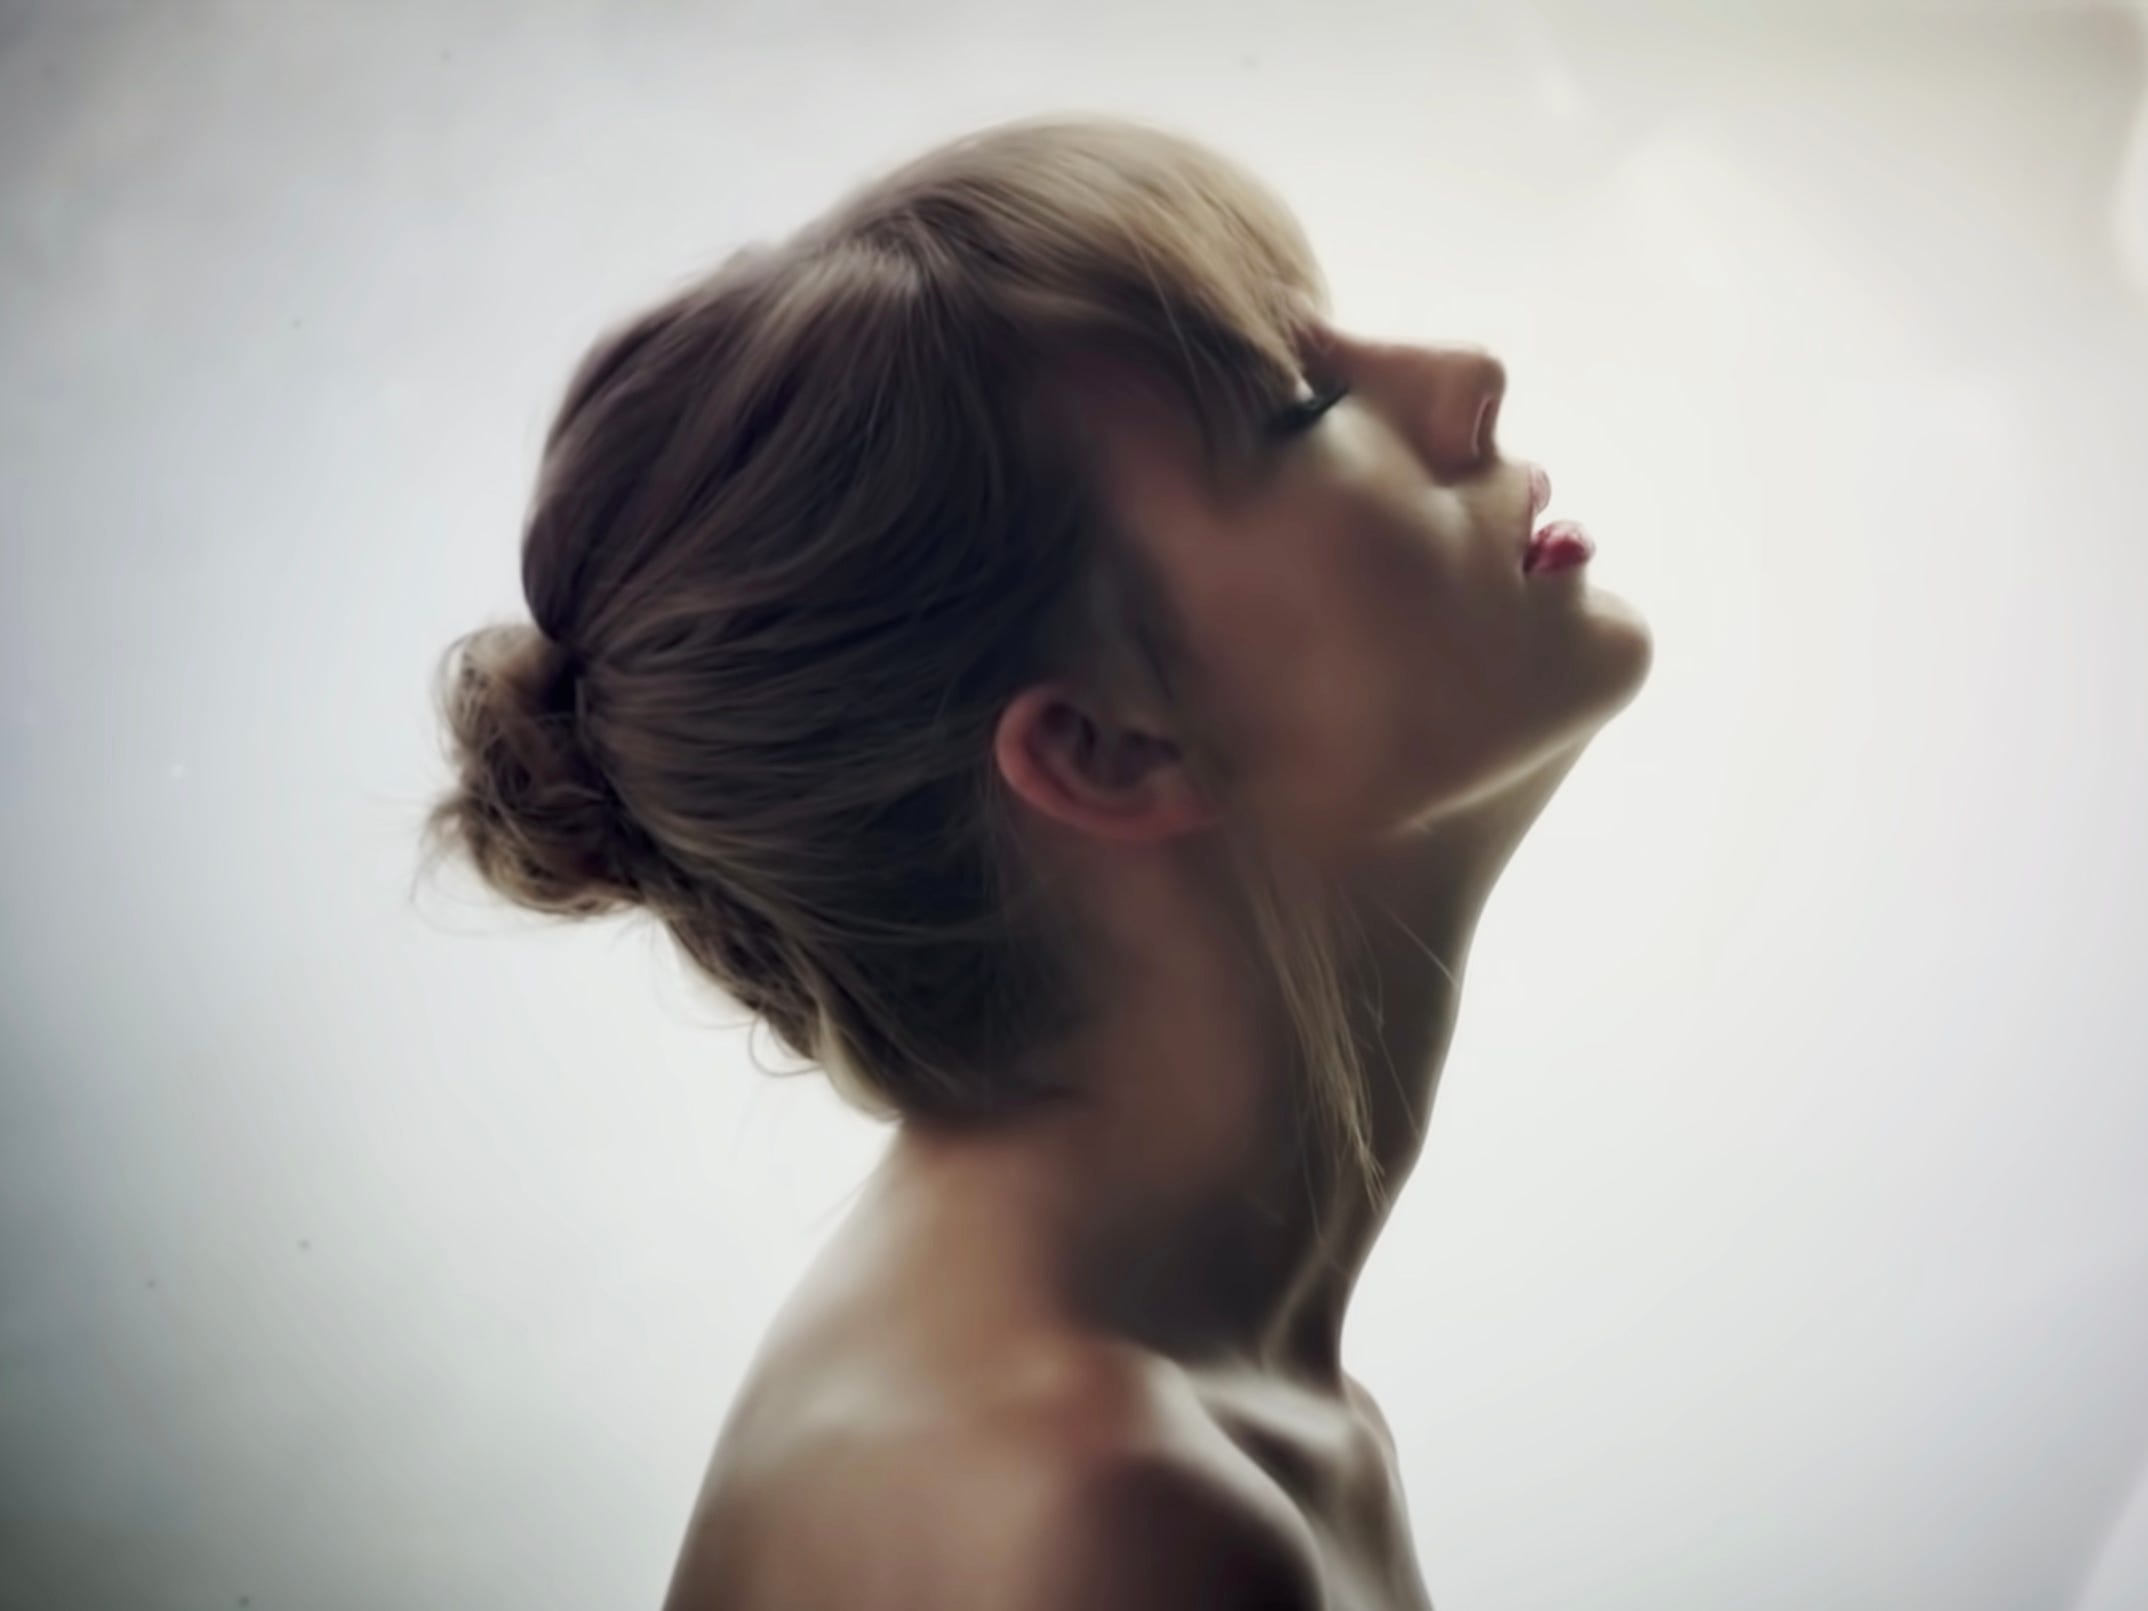 Musikvideo im Taylor-Swift-Stil